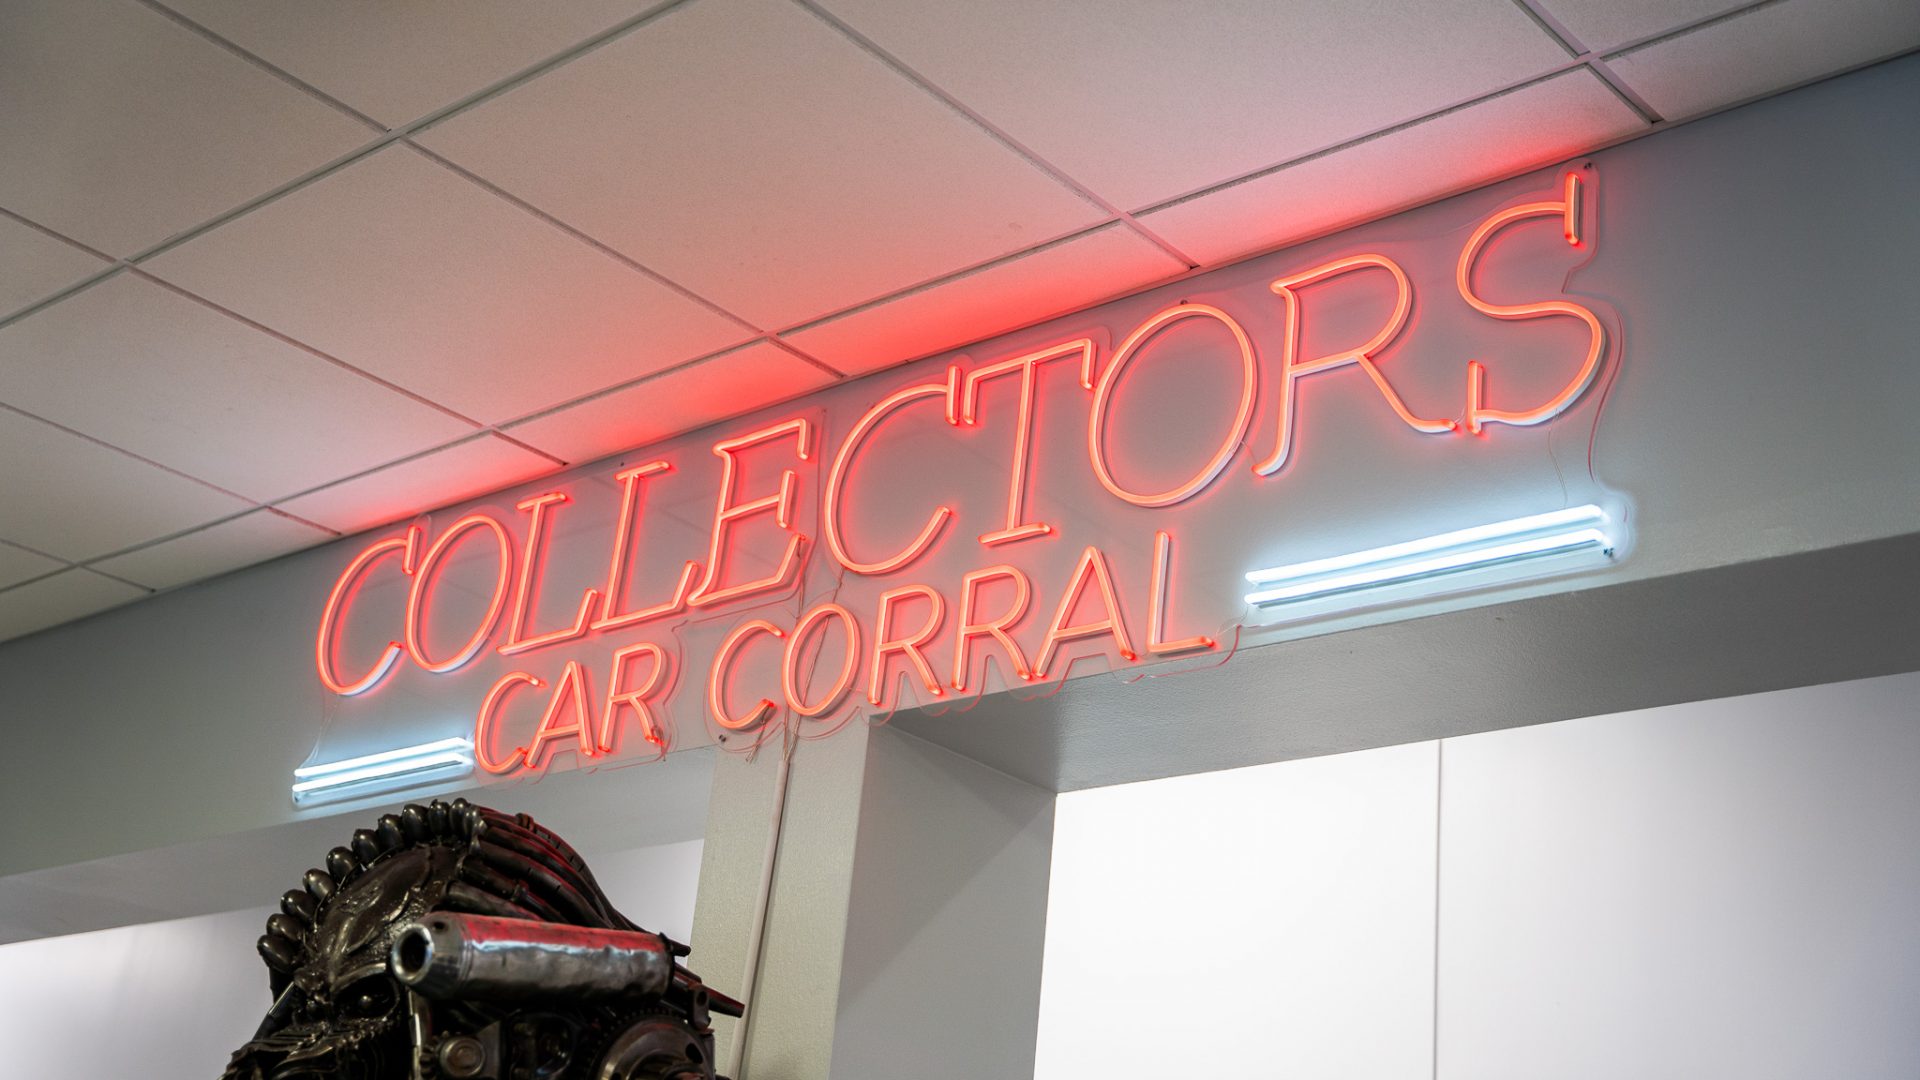 Collectors Car Corral 1